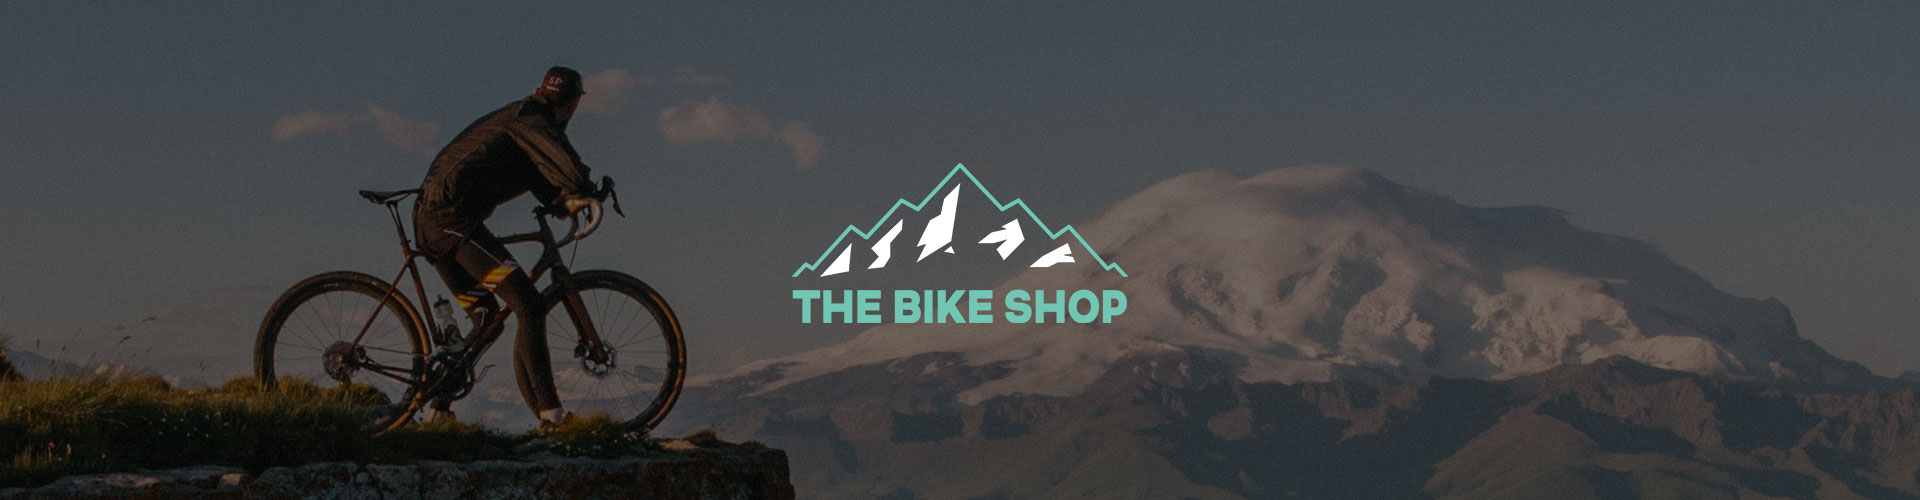 Case Study - The Bike Shop